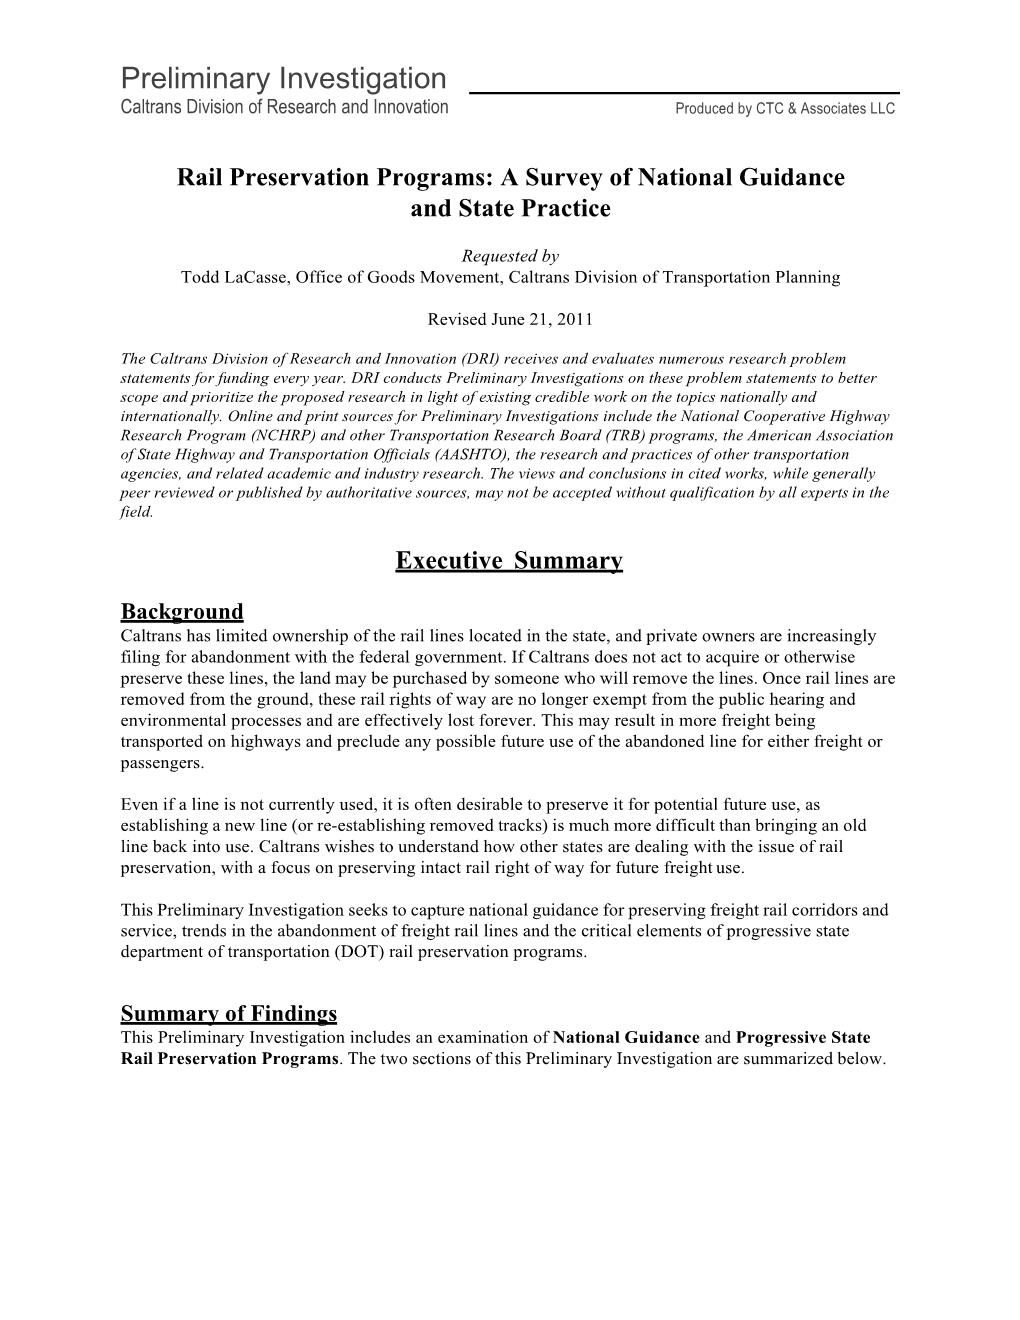 Rail Preservation Preliminary Investigation 5-31-11